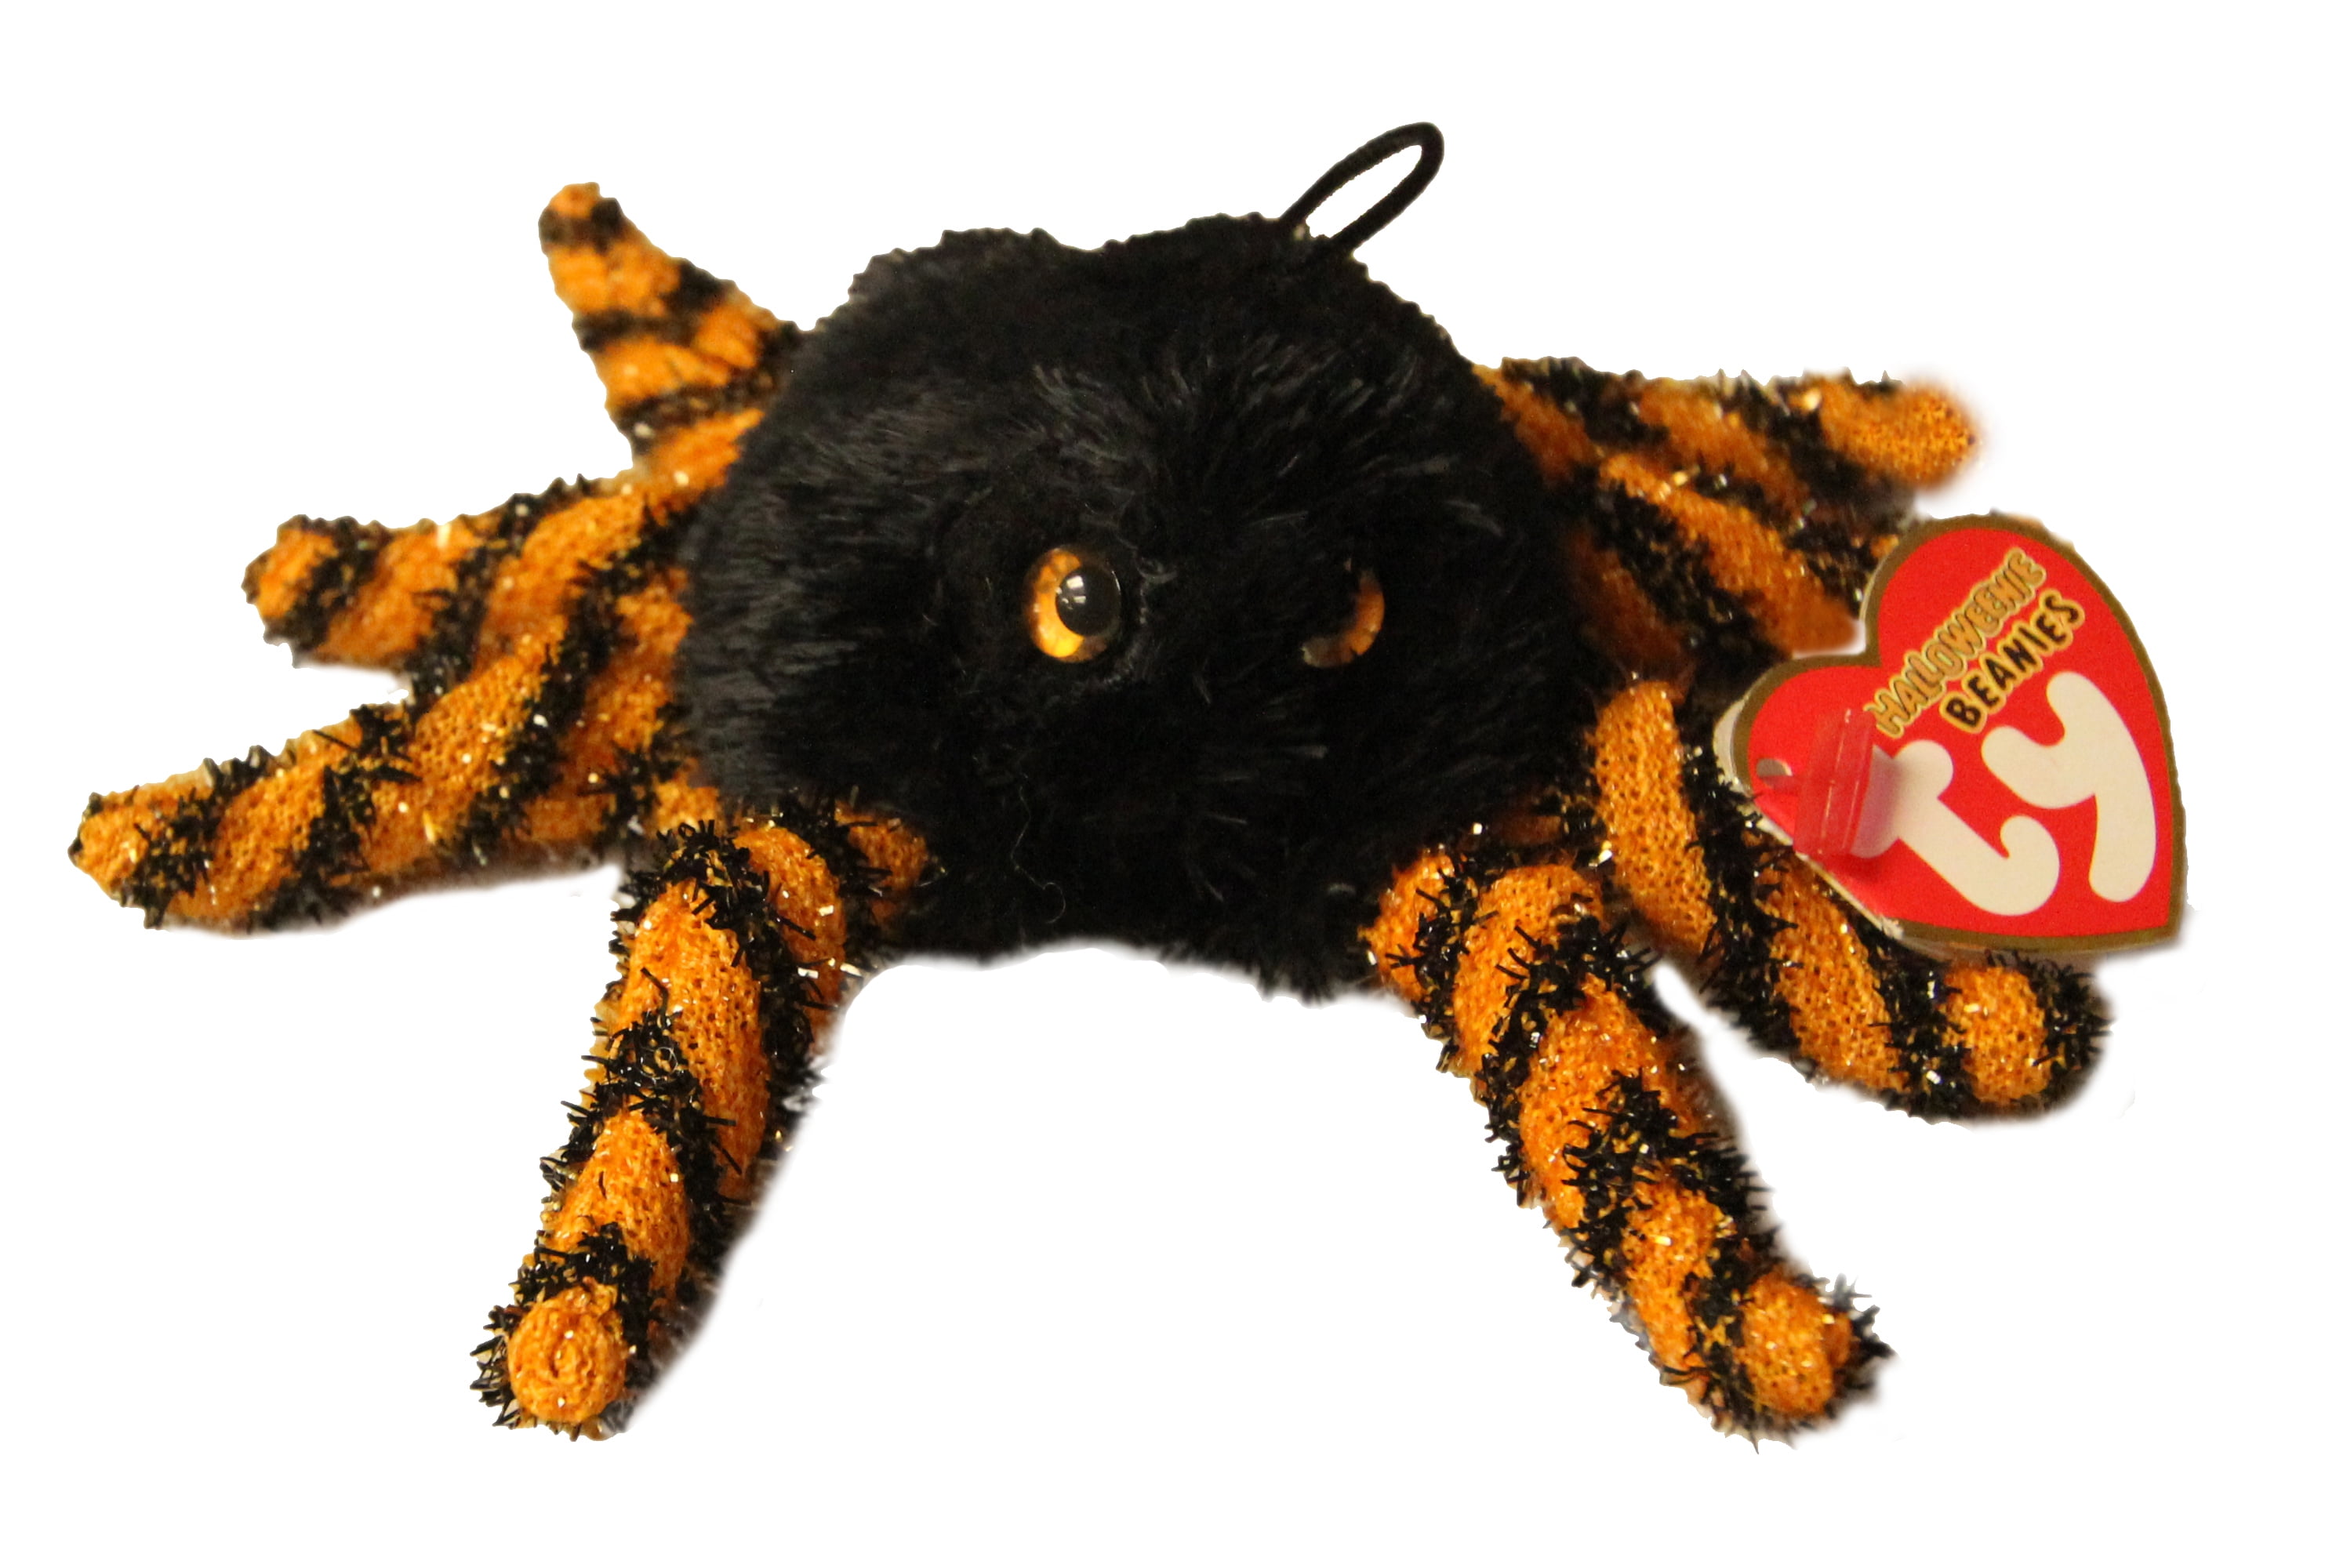 TY Halloweenie: Creeps the Spider | Stuffed Animal | MWMT 